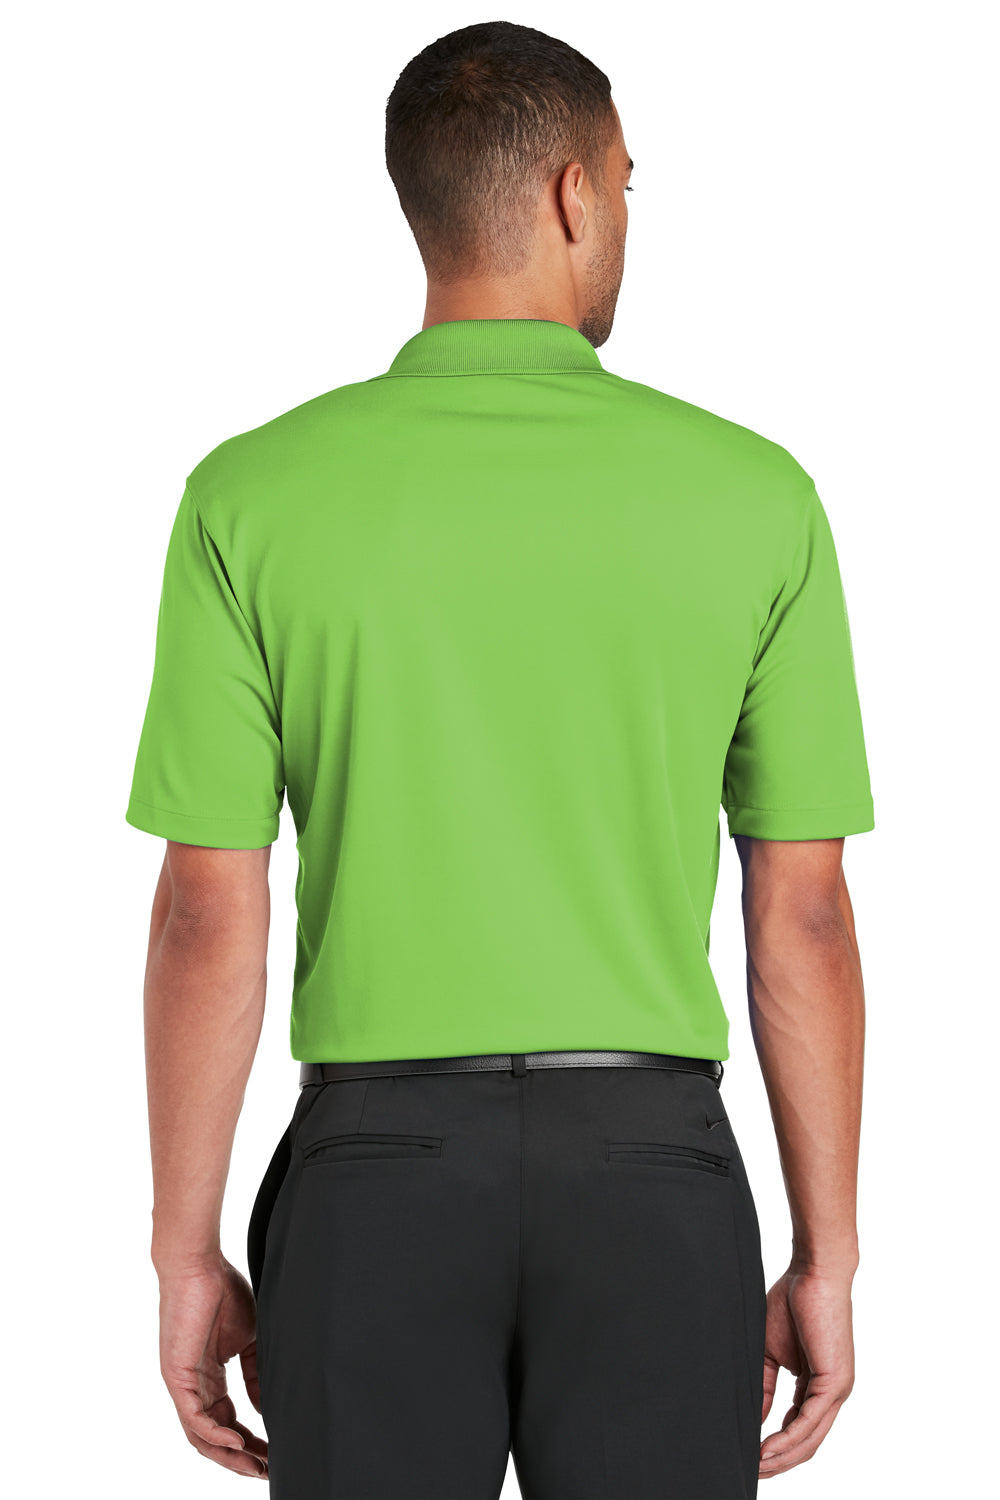 Nike 363807 Mens Dri-Fit Moisture Wicking Short Sleeve Polo Shirt Action Green Back